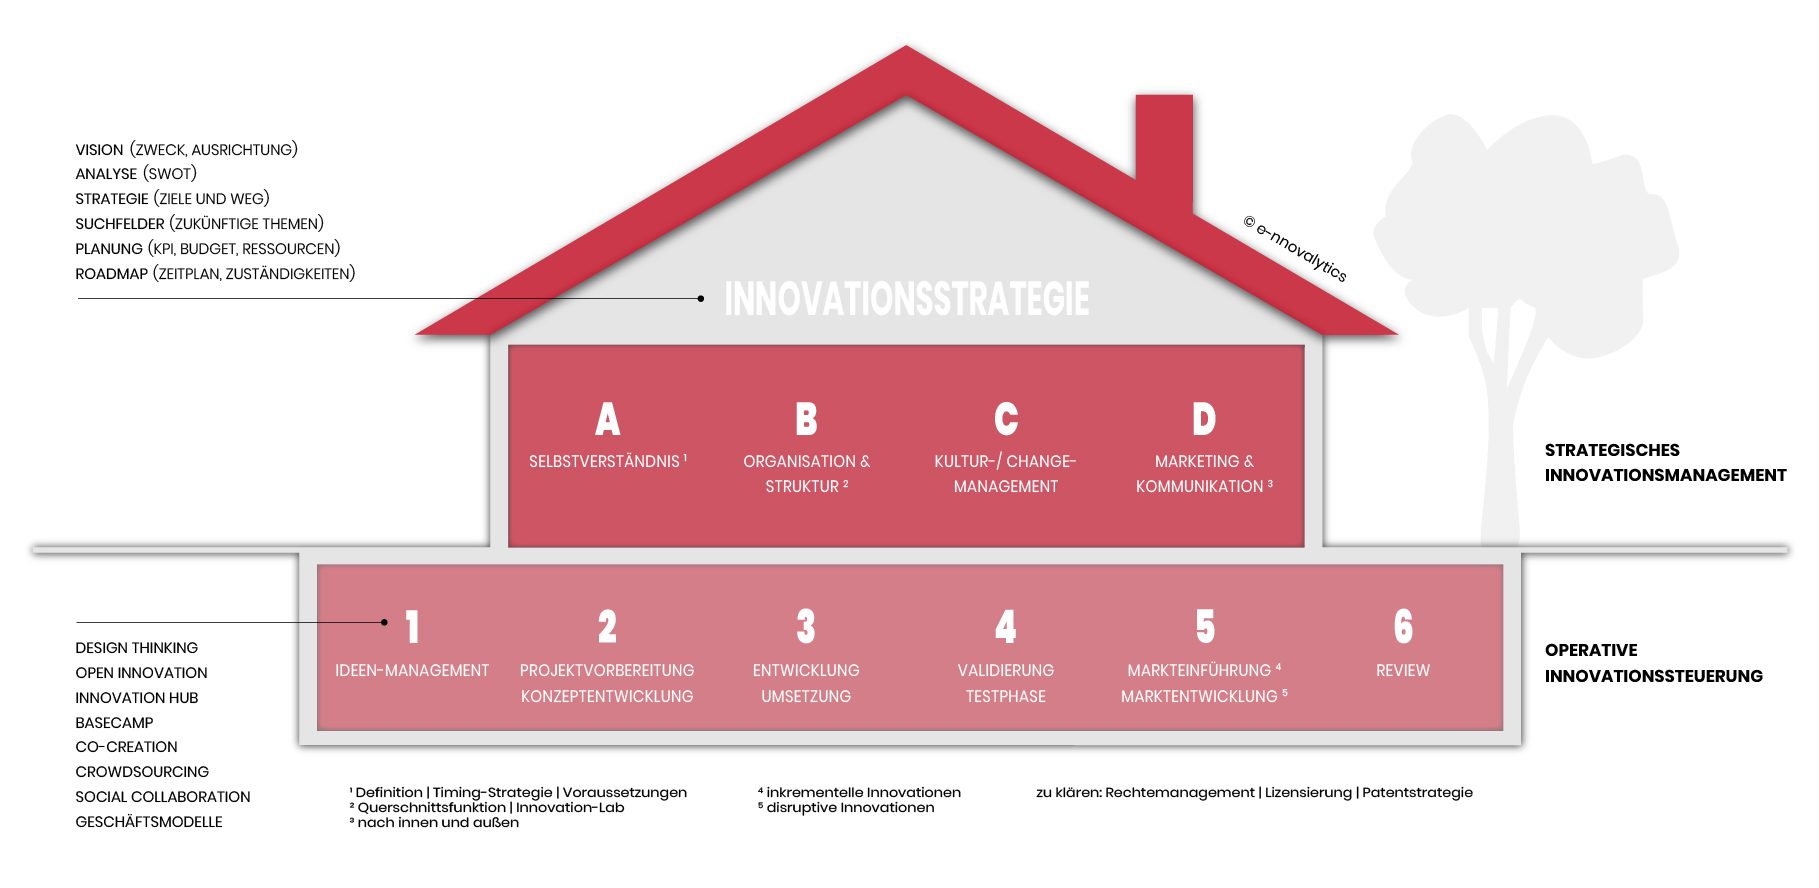 Das House of Innovation